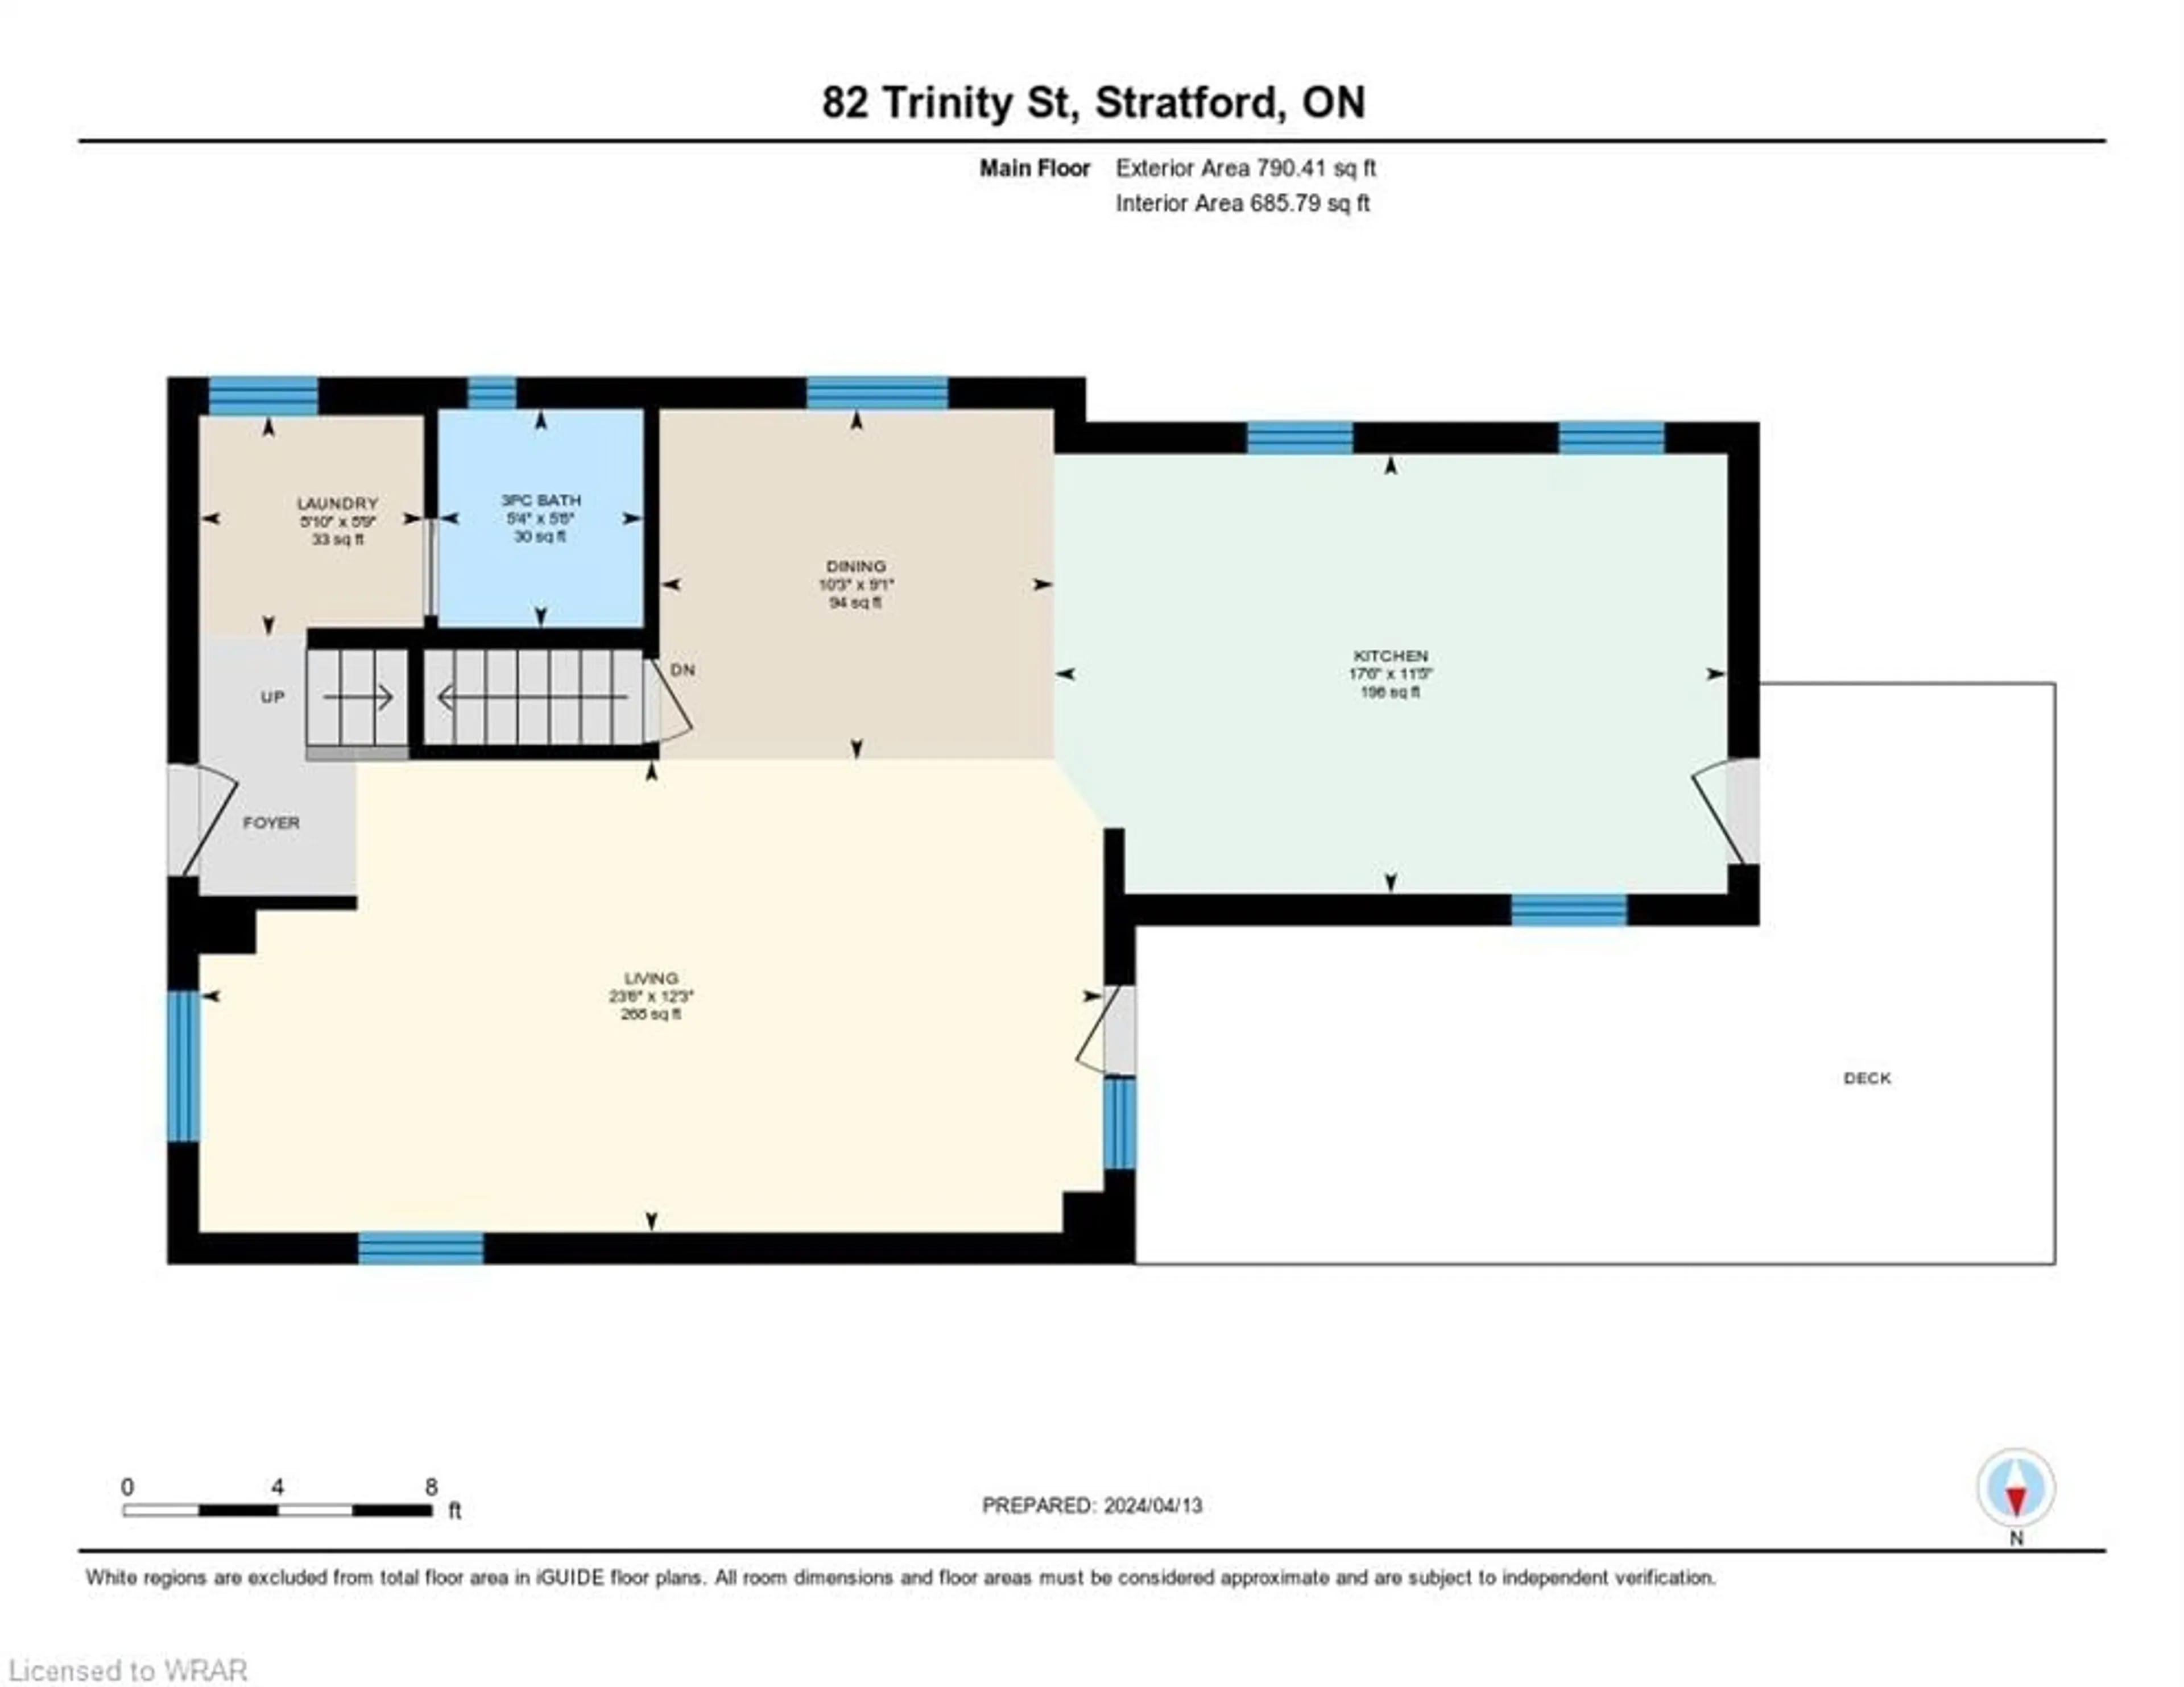 Floor plan for 82 Trinity St, Stratford Ontario N5A 4P6